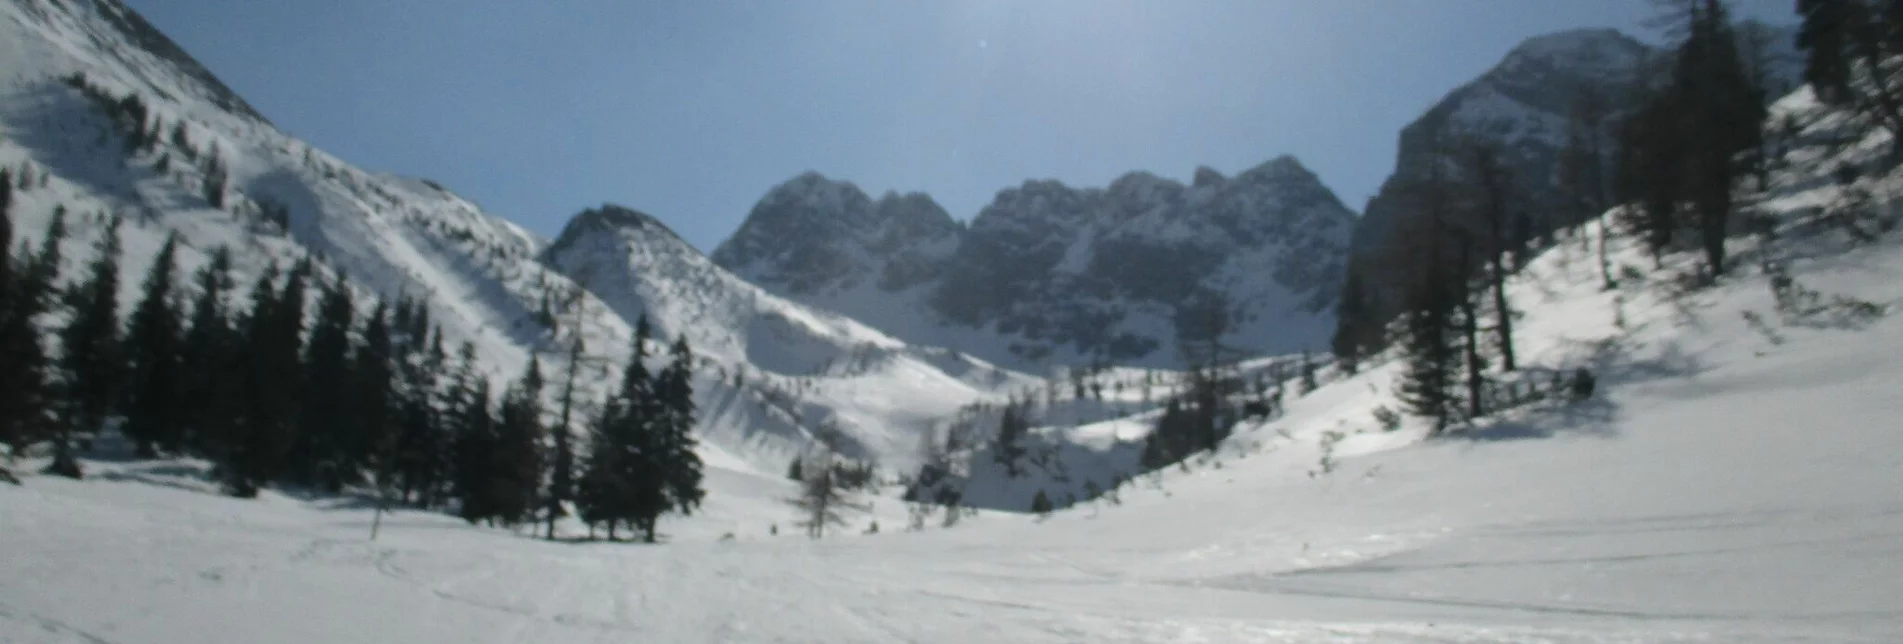 Ski Touring Kerschkern, dream tour in Triebental - Touren-Impression #1 | © Erlebnisregion Murtal